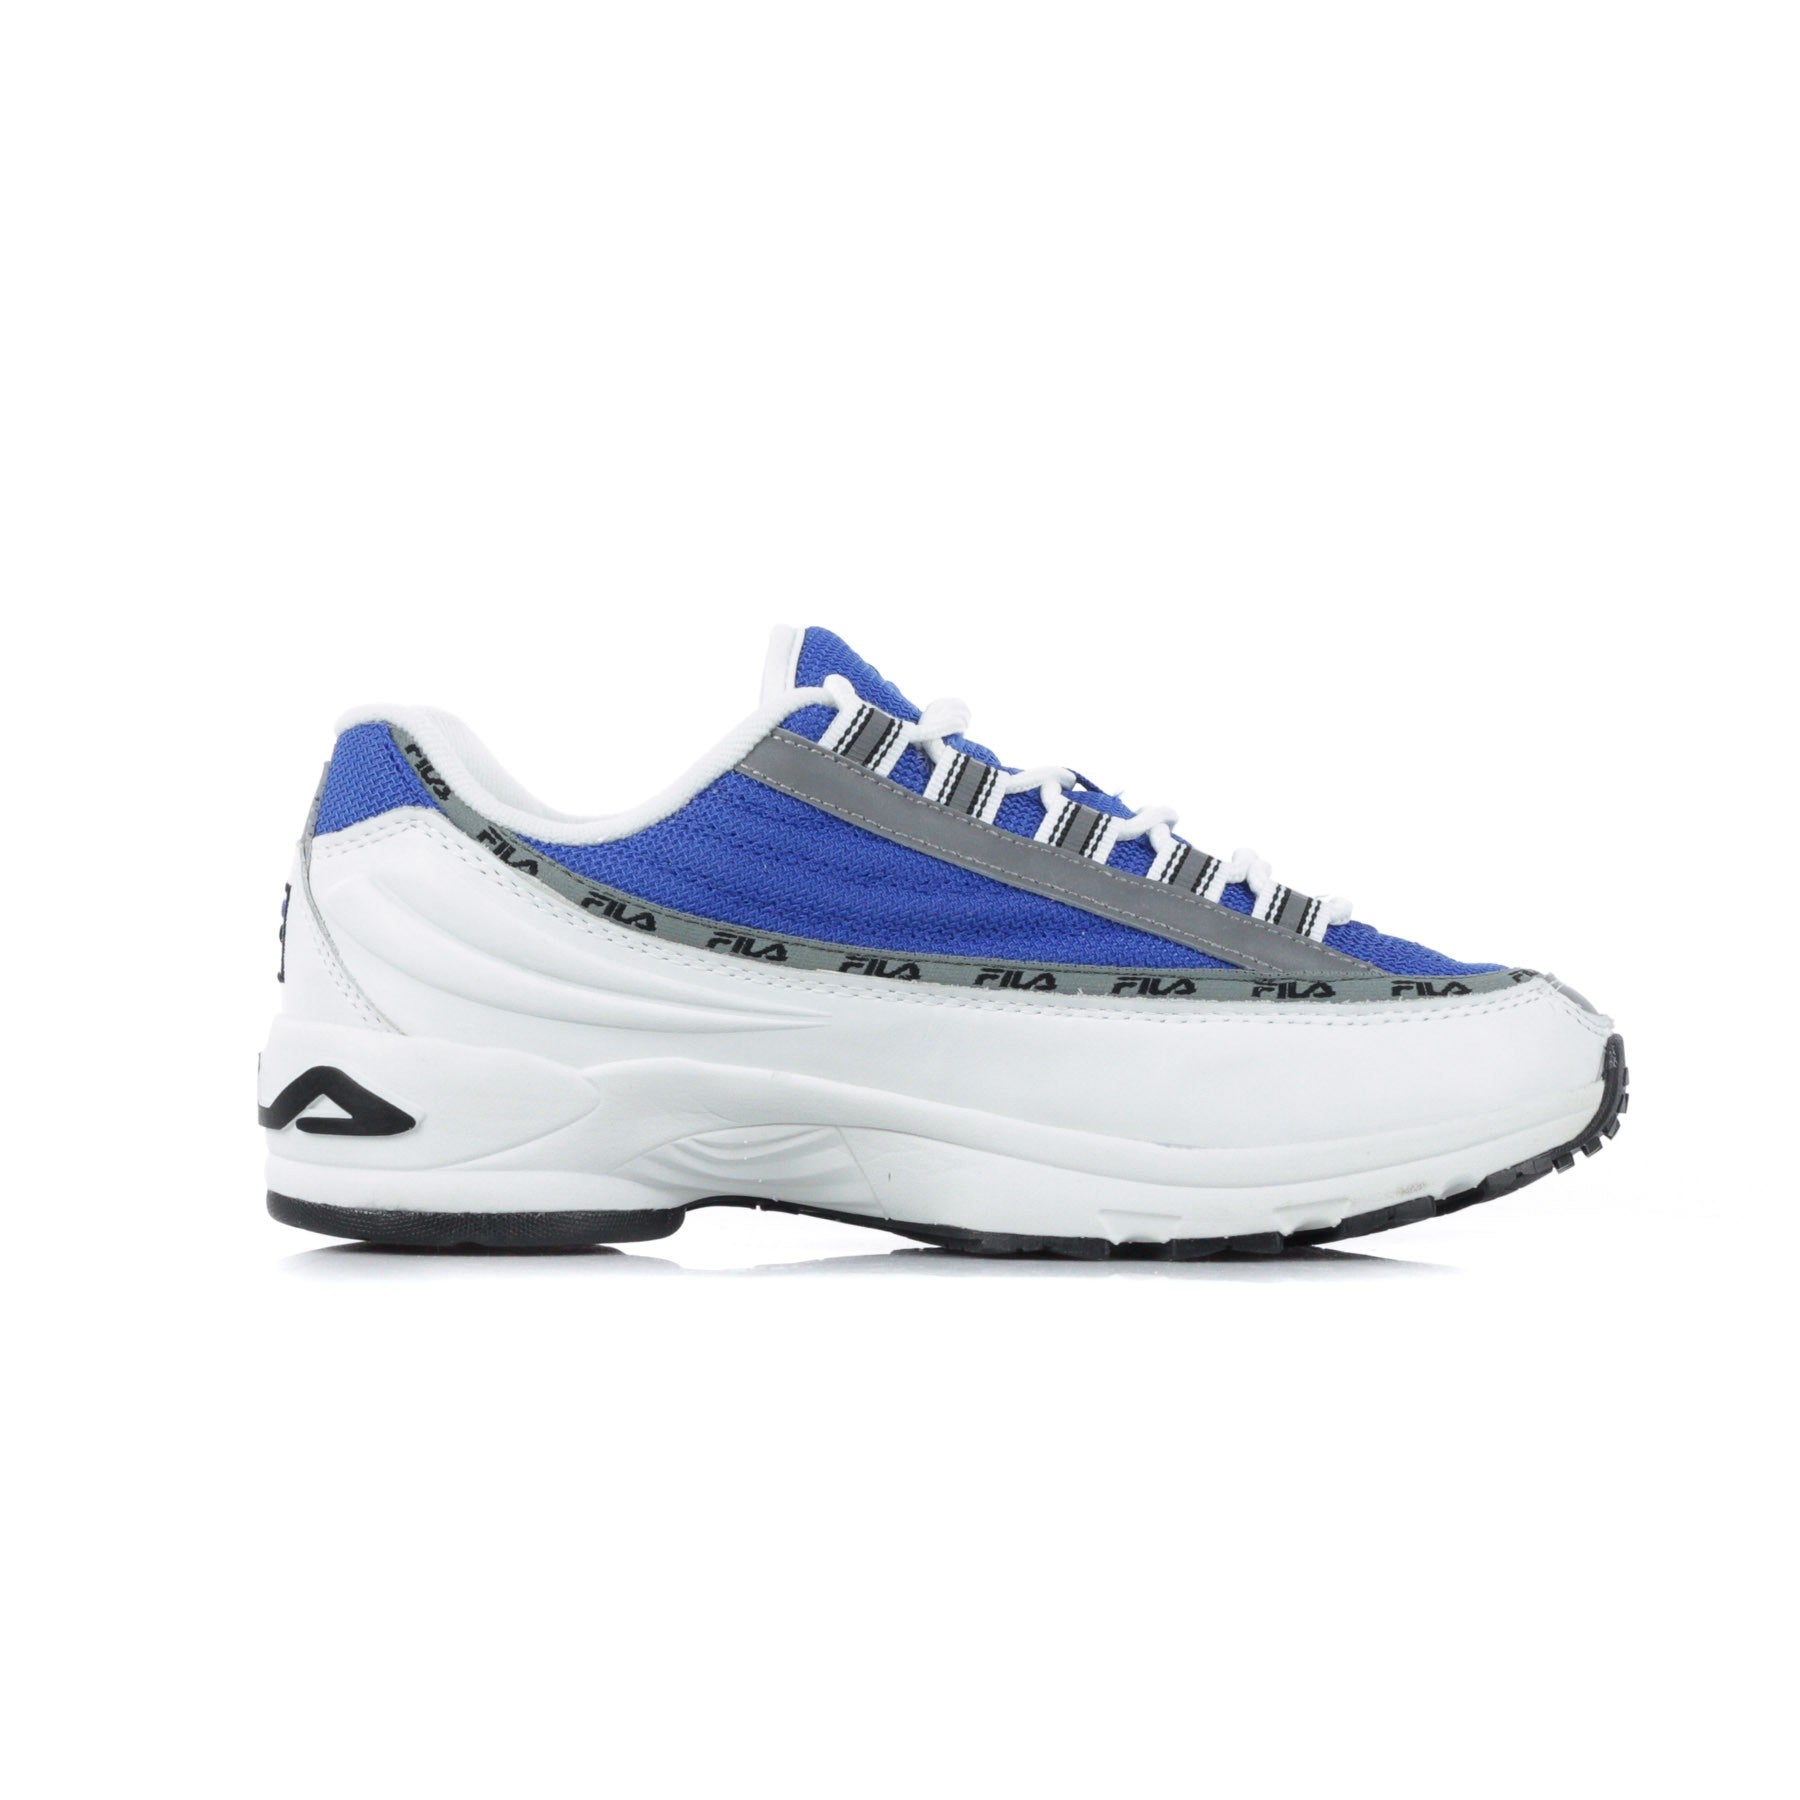 Low Men's Shoe Dstr97 White/electric Blue